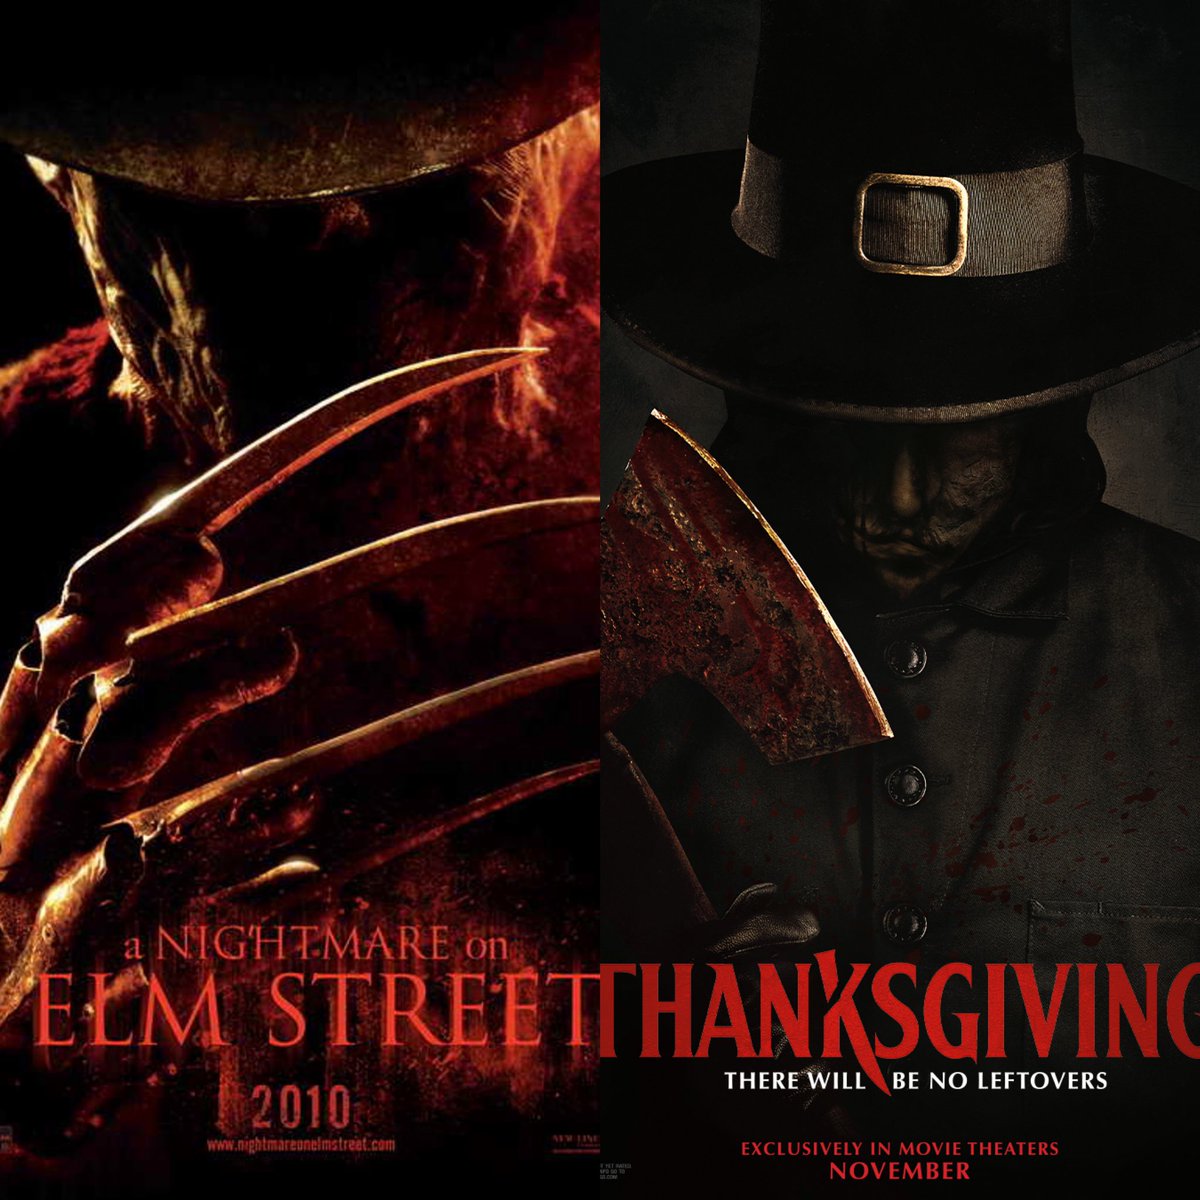 Which slasher movie has the scarier villain?
Freddy Krueger [or] John Carver⁉️

#ANightmareOnElmStreet #Thanksgiving